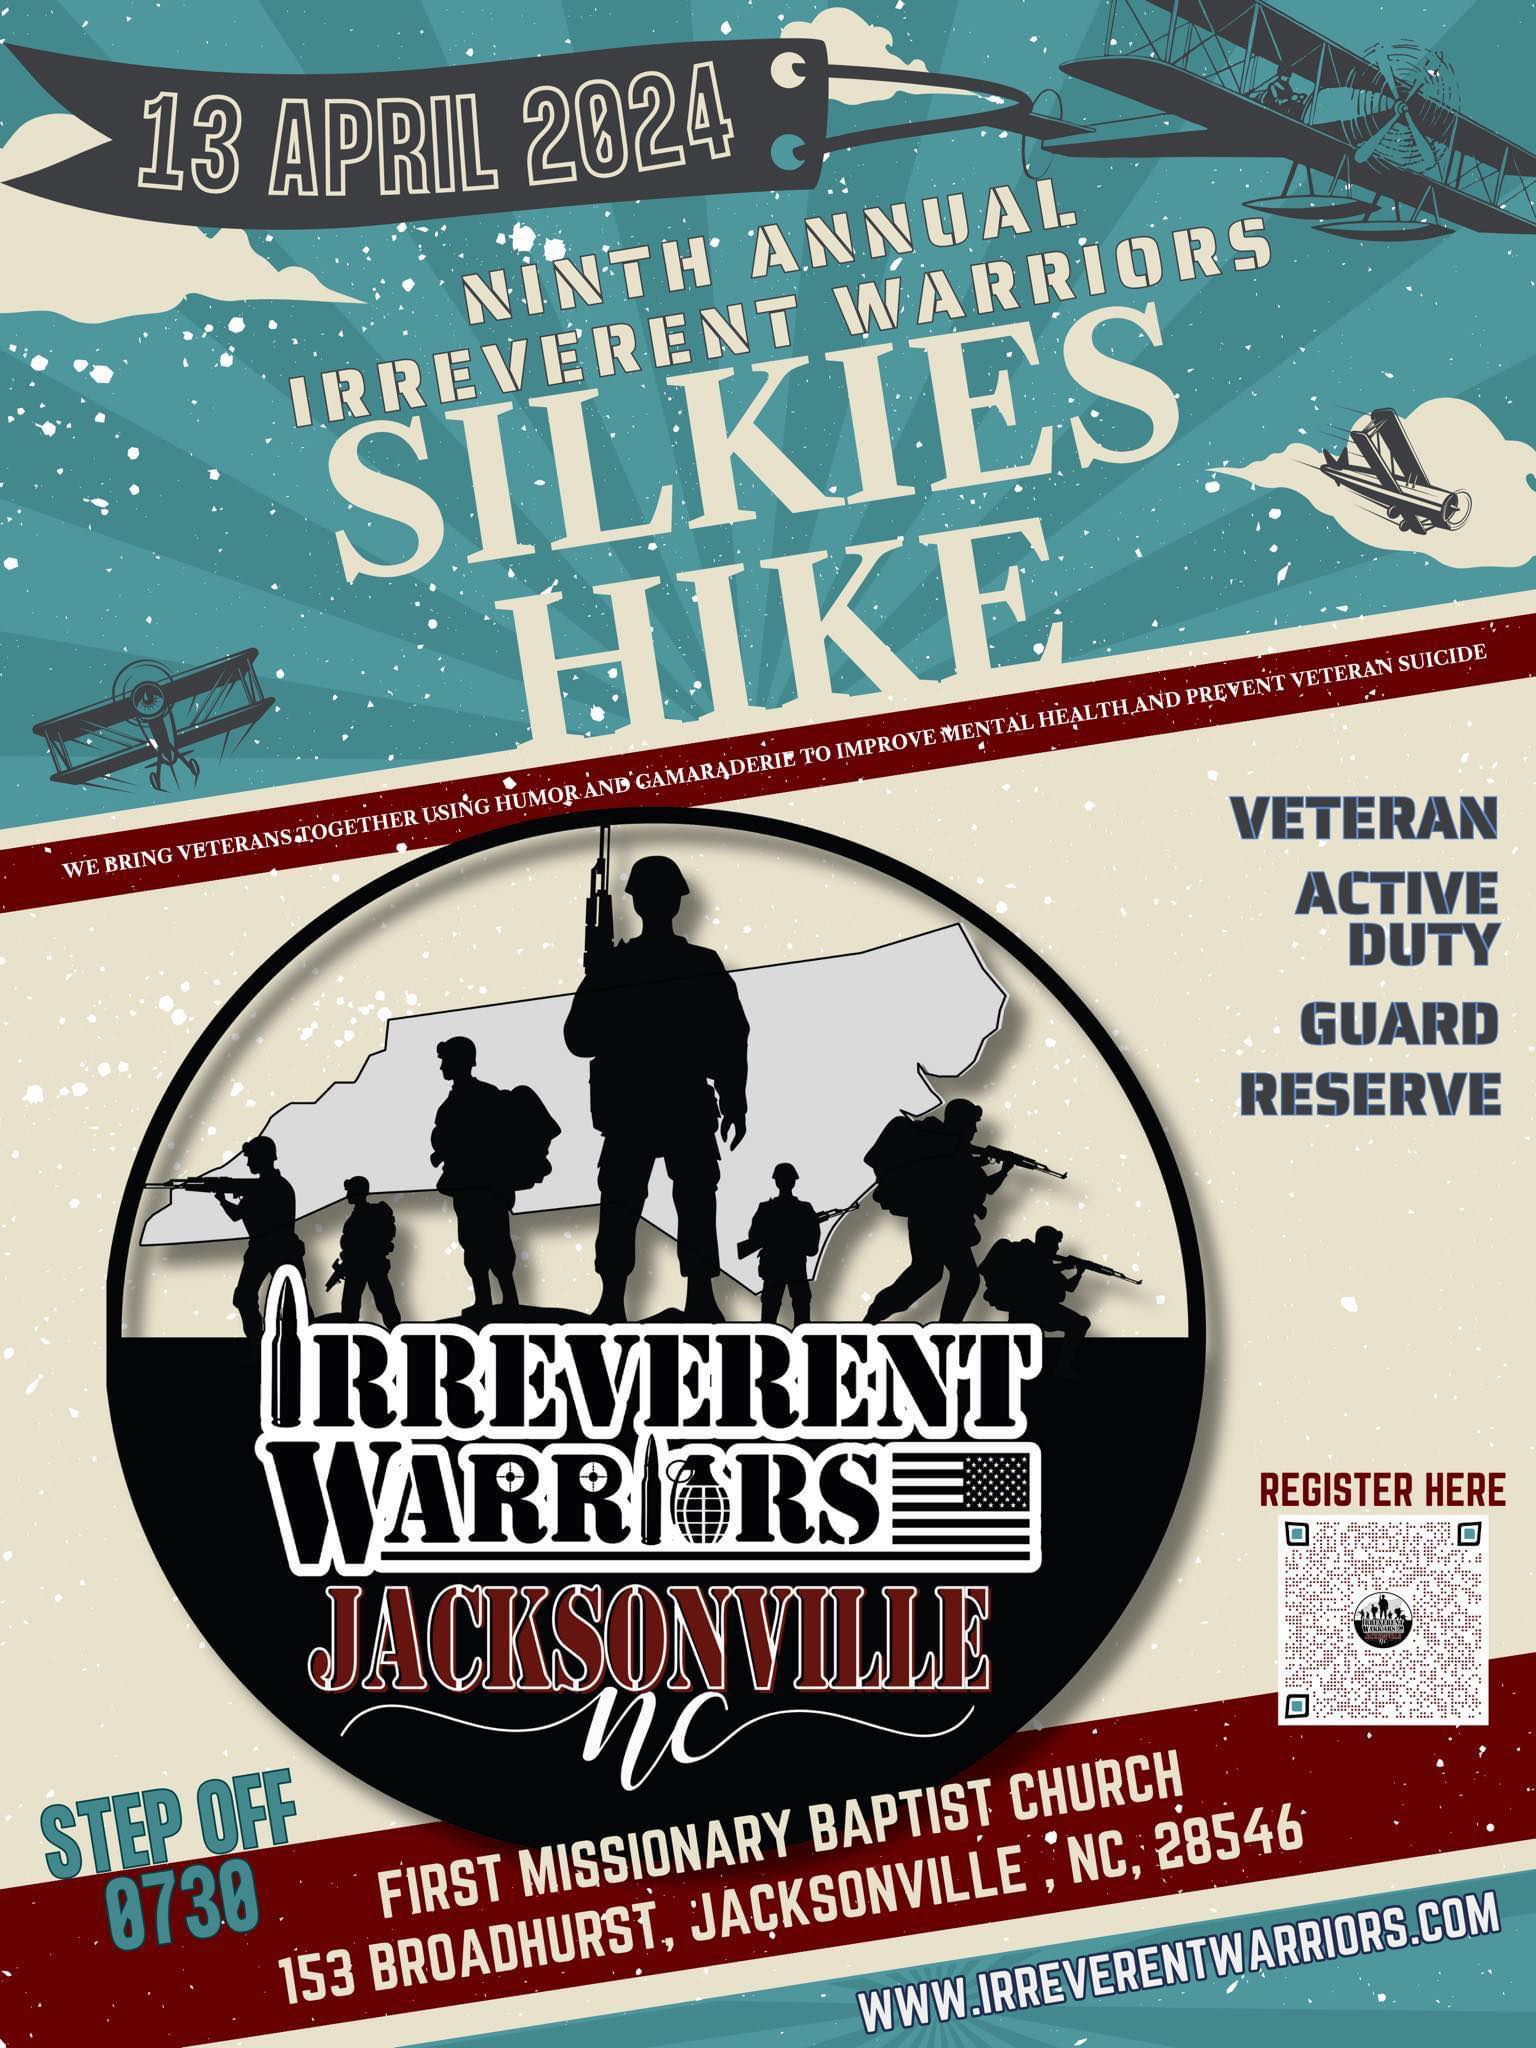 9th Irreverent warriors Silkies Hike